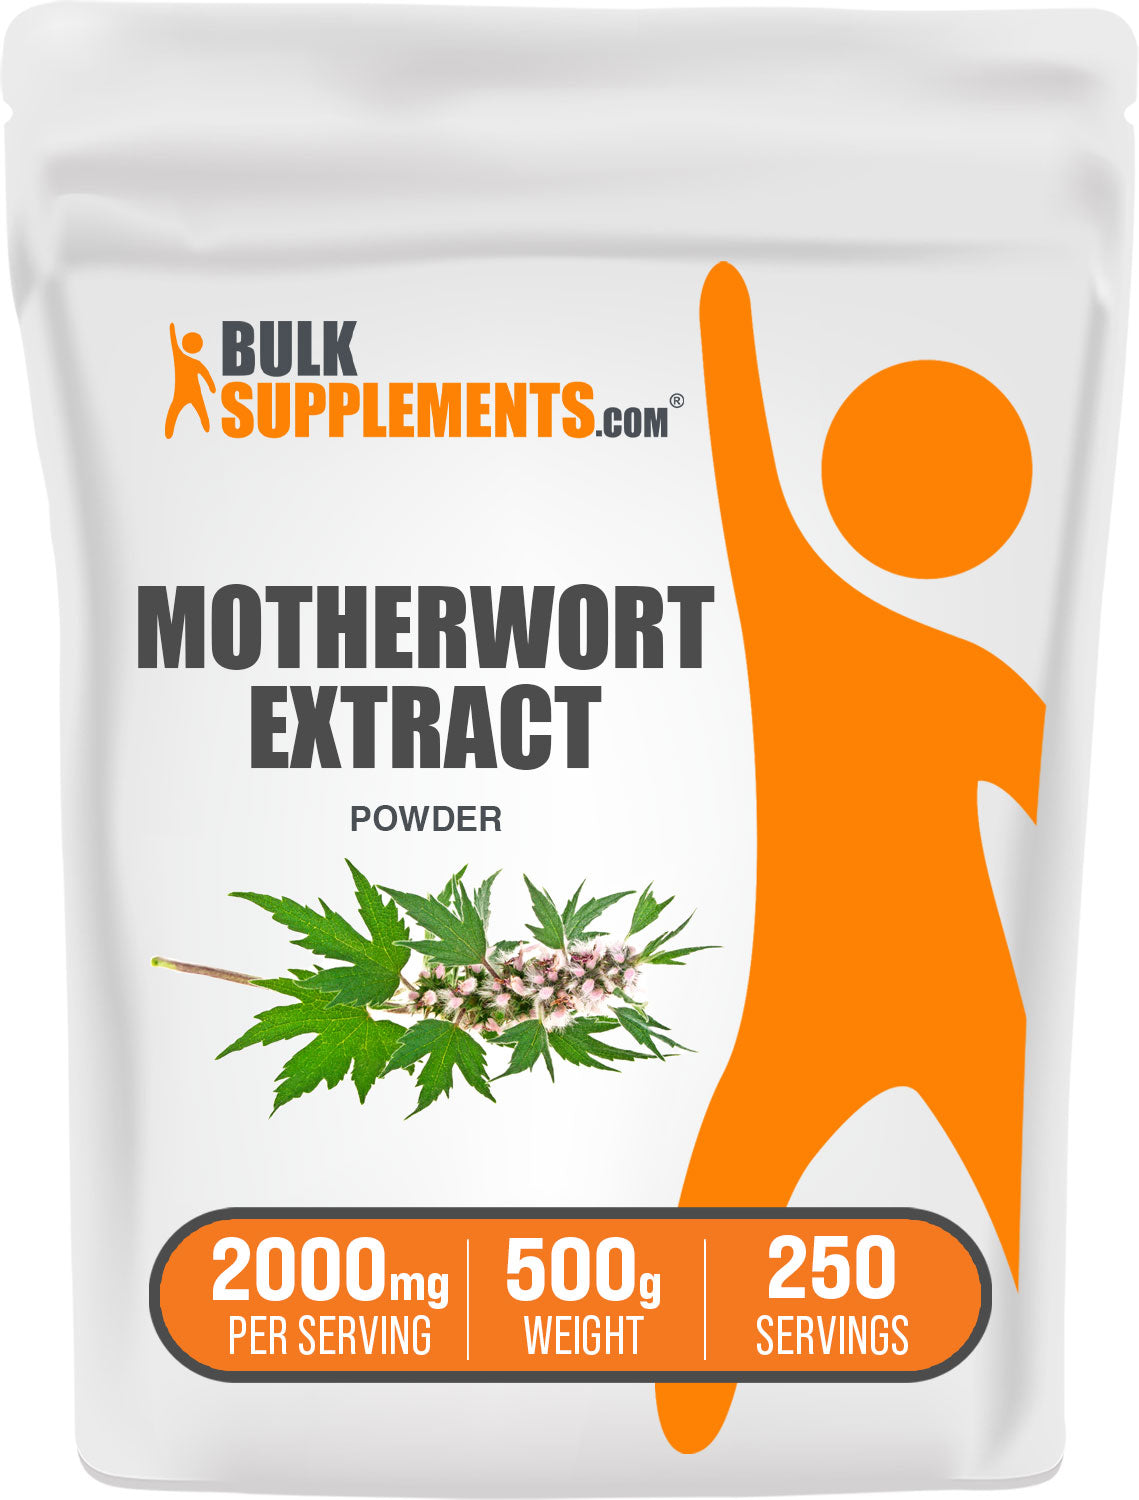 BulkSupplements.com Motherwort Extract Powder 500g Bag